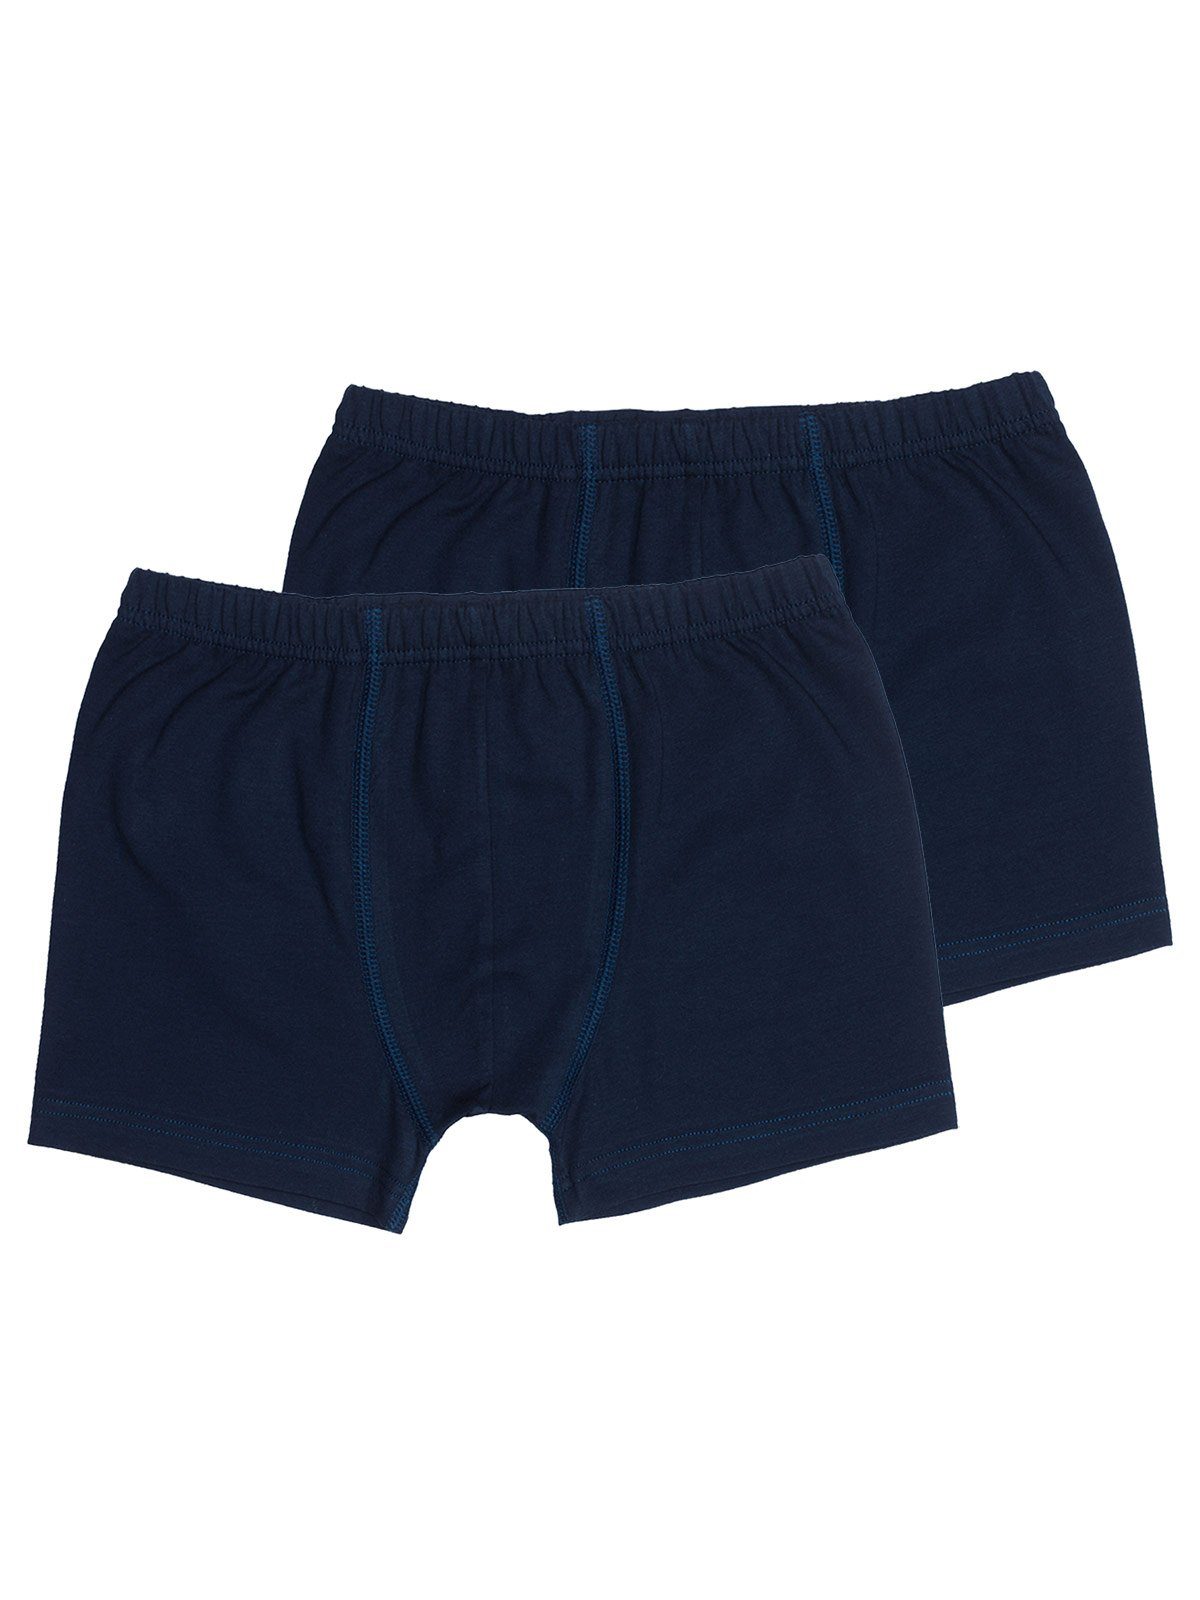 Sweety for Kids Boxershorts 2er Sparpack Knaben Retro Shorts Single Jersey (Spar-Set, 2-St) hohe Markenqualität navy